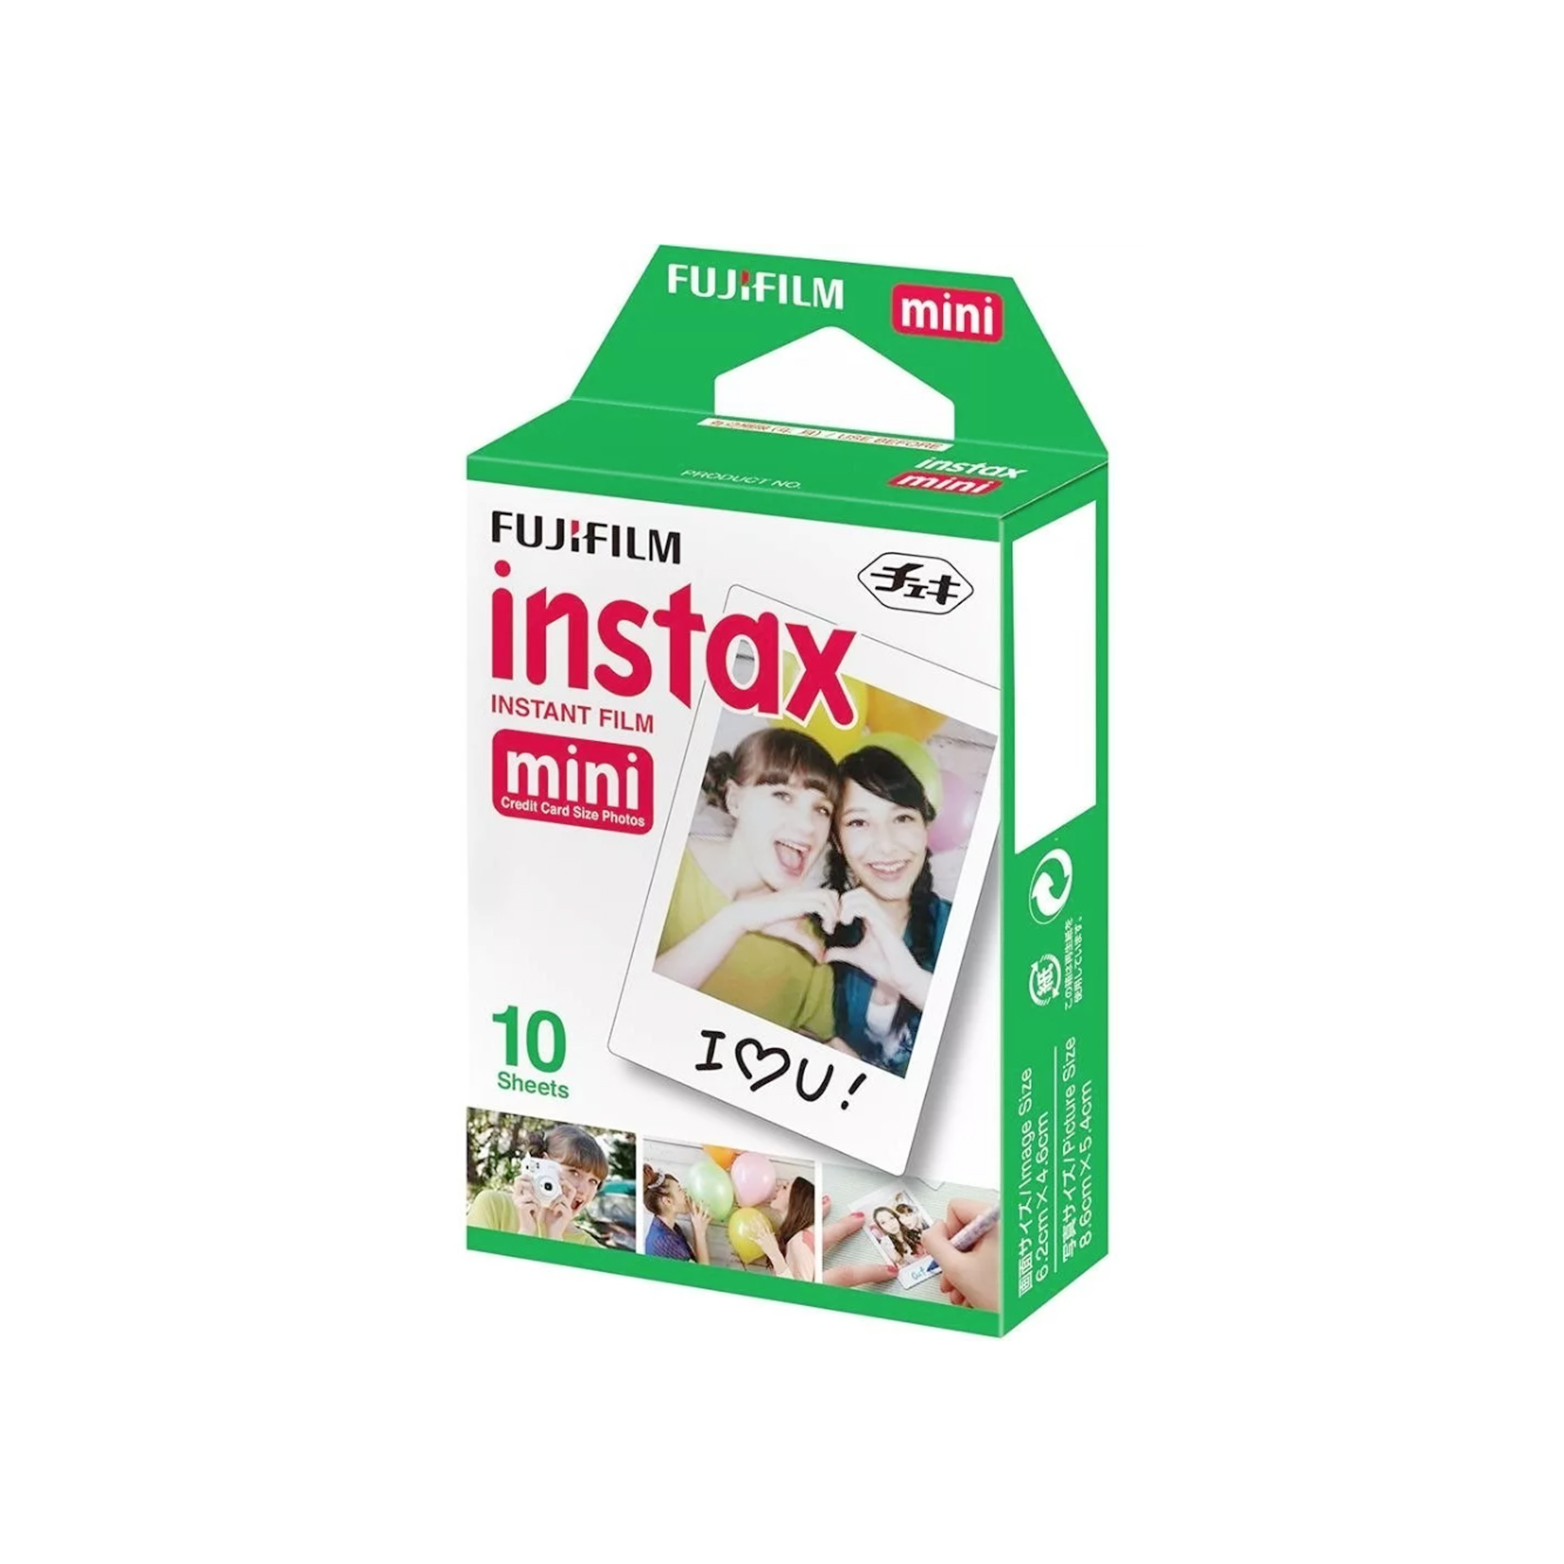 instax film